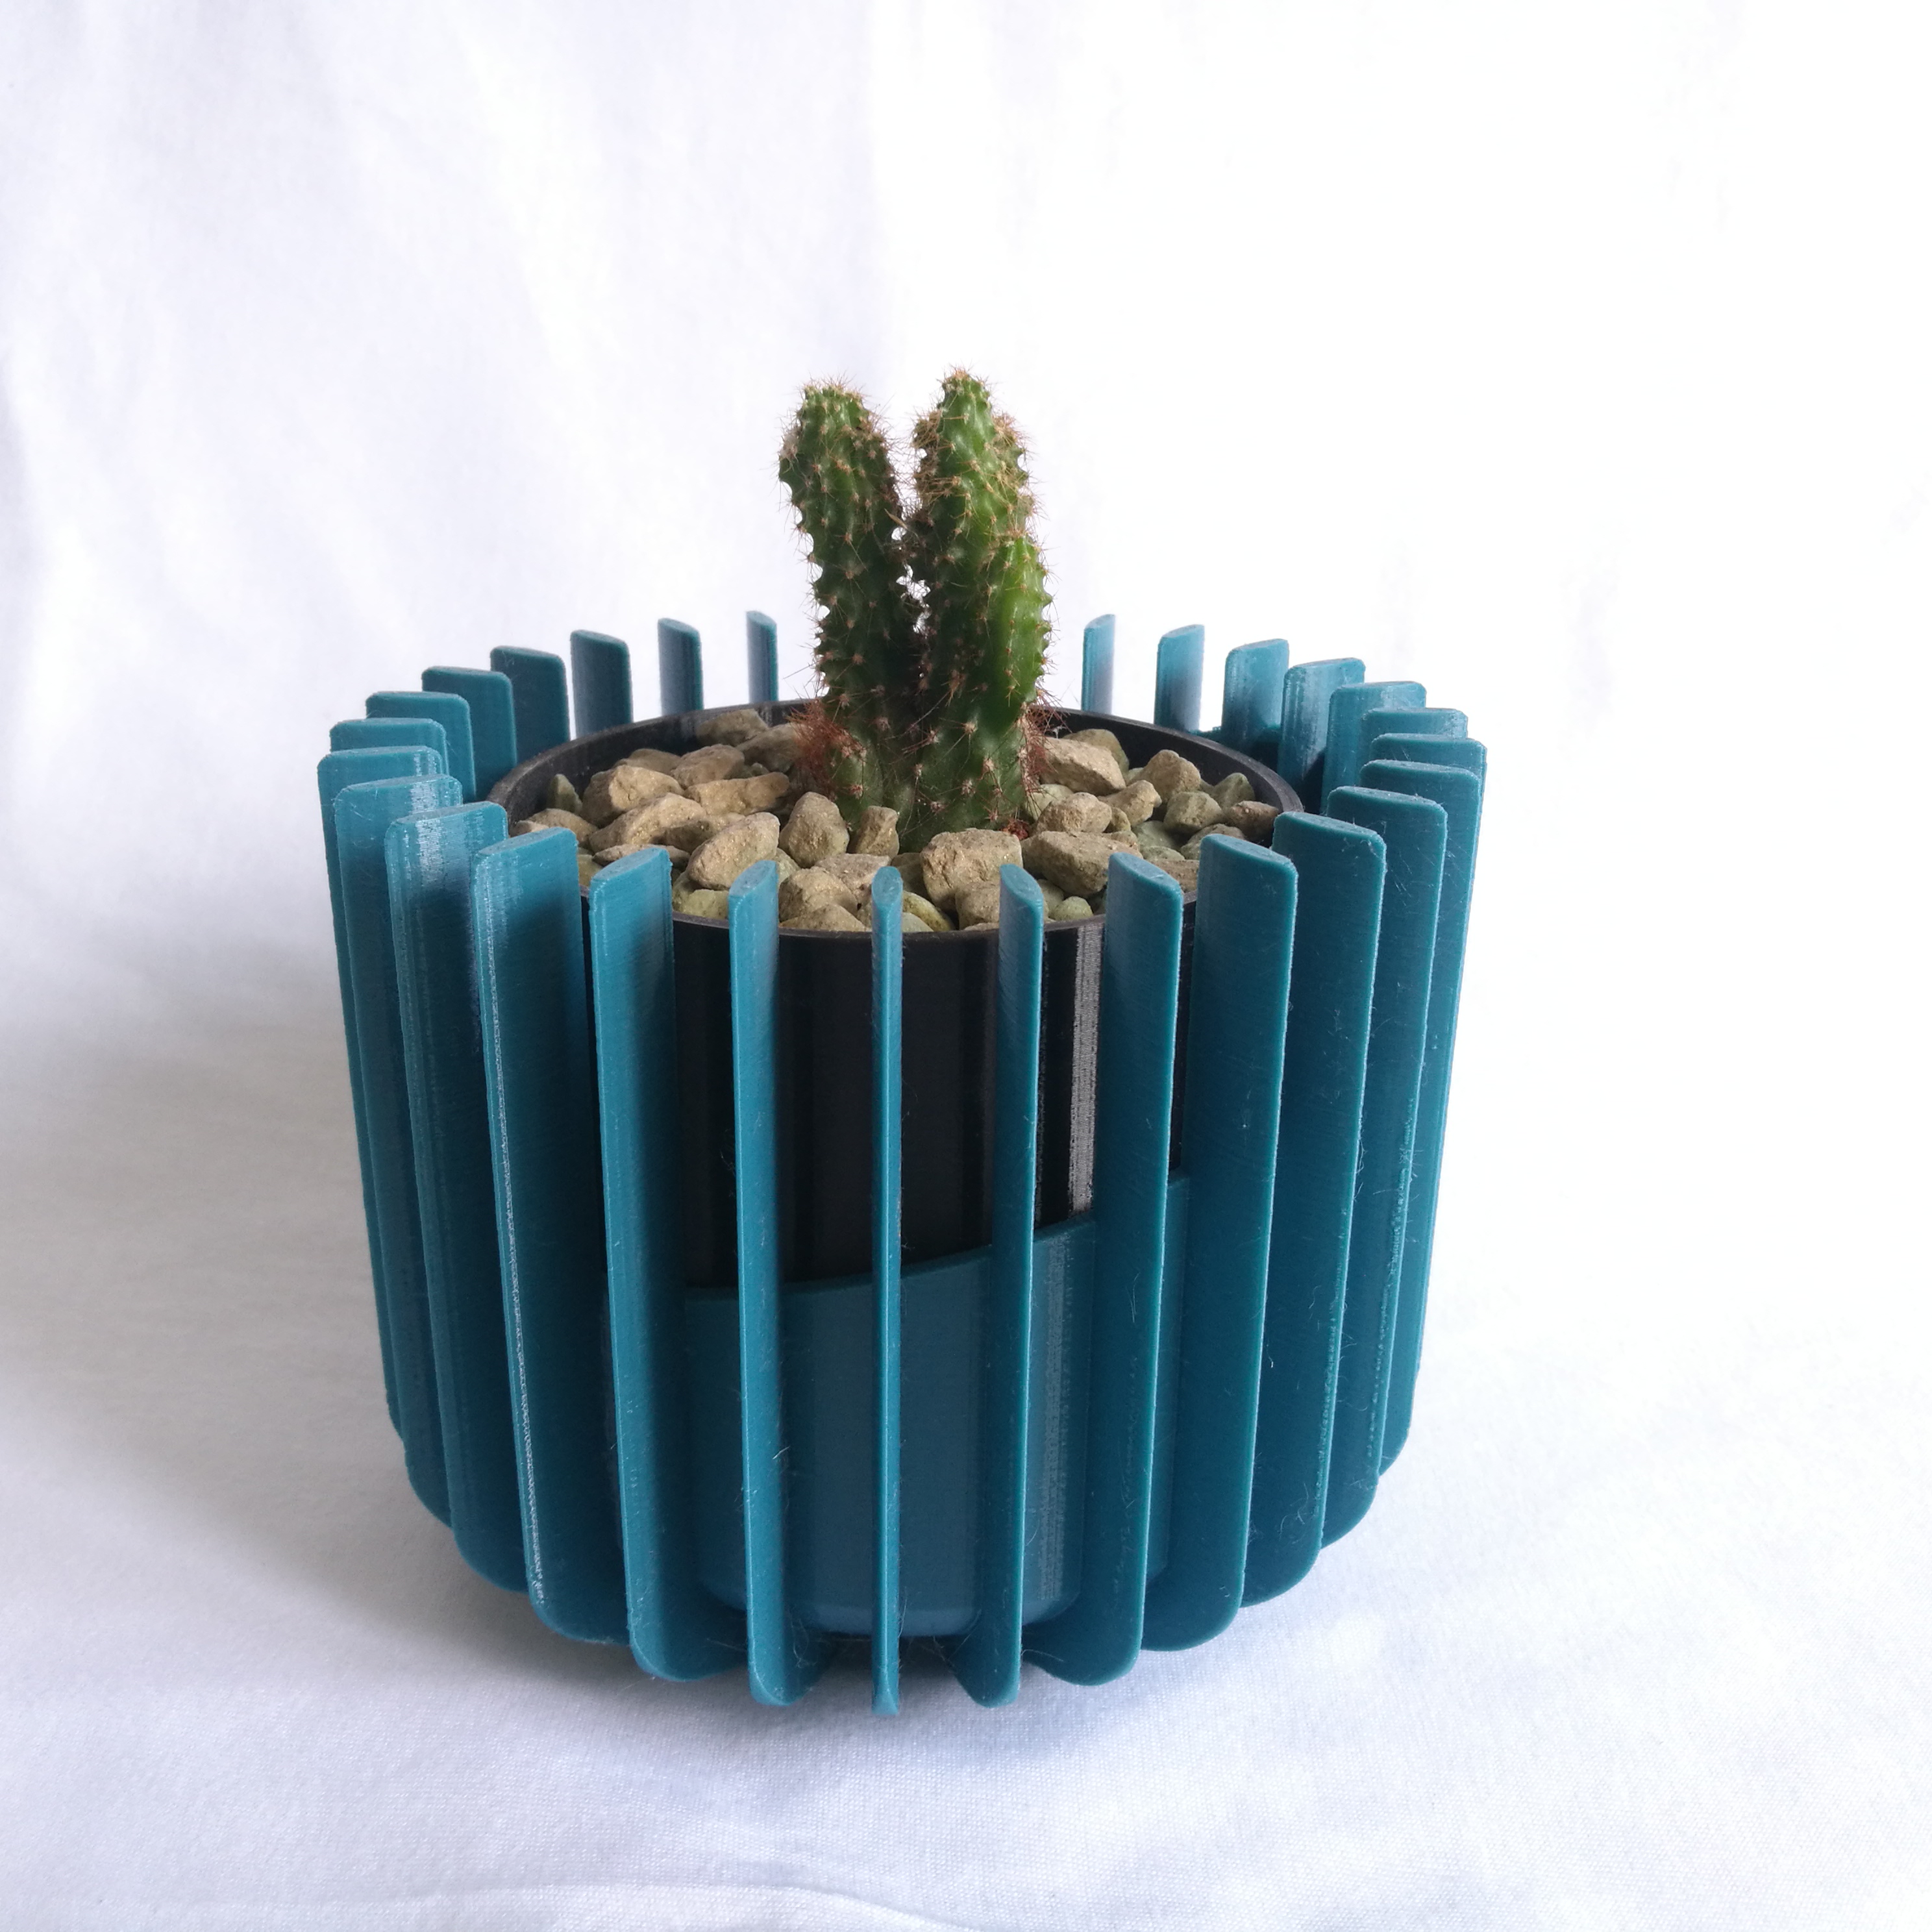 Self-watering plant pot